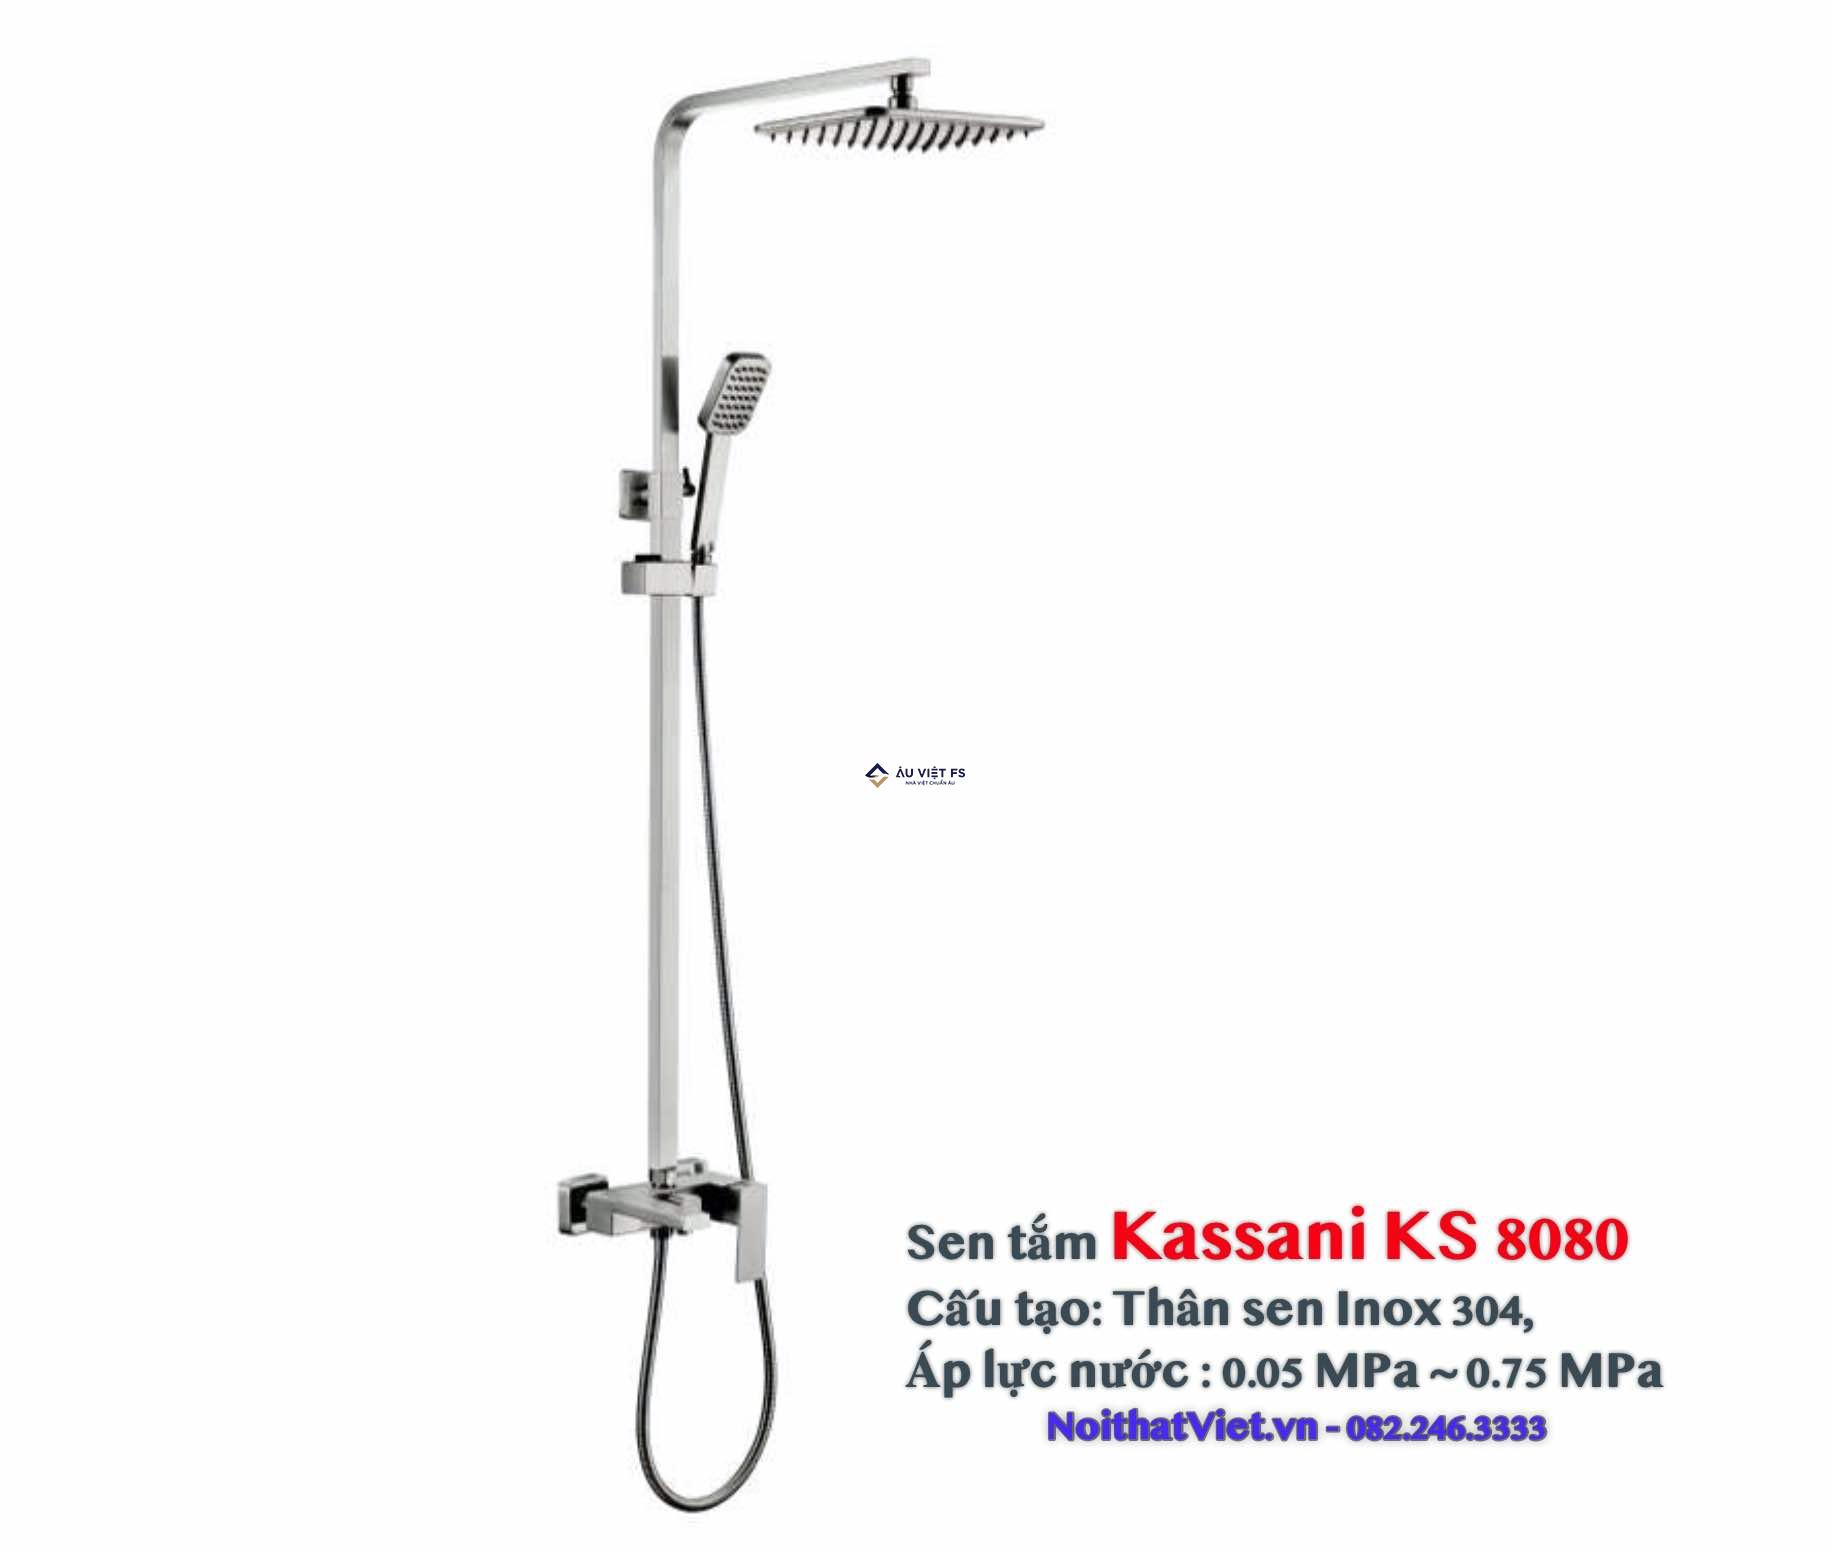 Kassani KS 8080, Kassani, Giá Kassani, Sen cây Kassani, Sen tắm Kassani, sen tắm cây Kassani, Sen tắm nóng lạnh